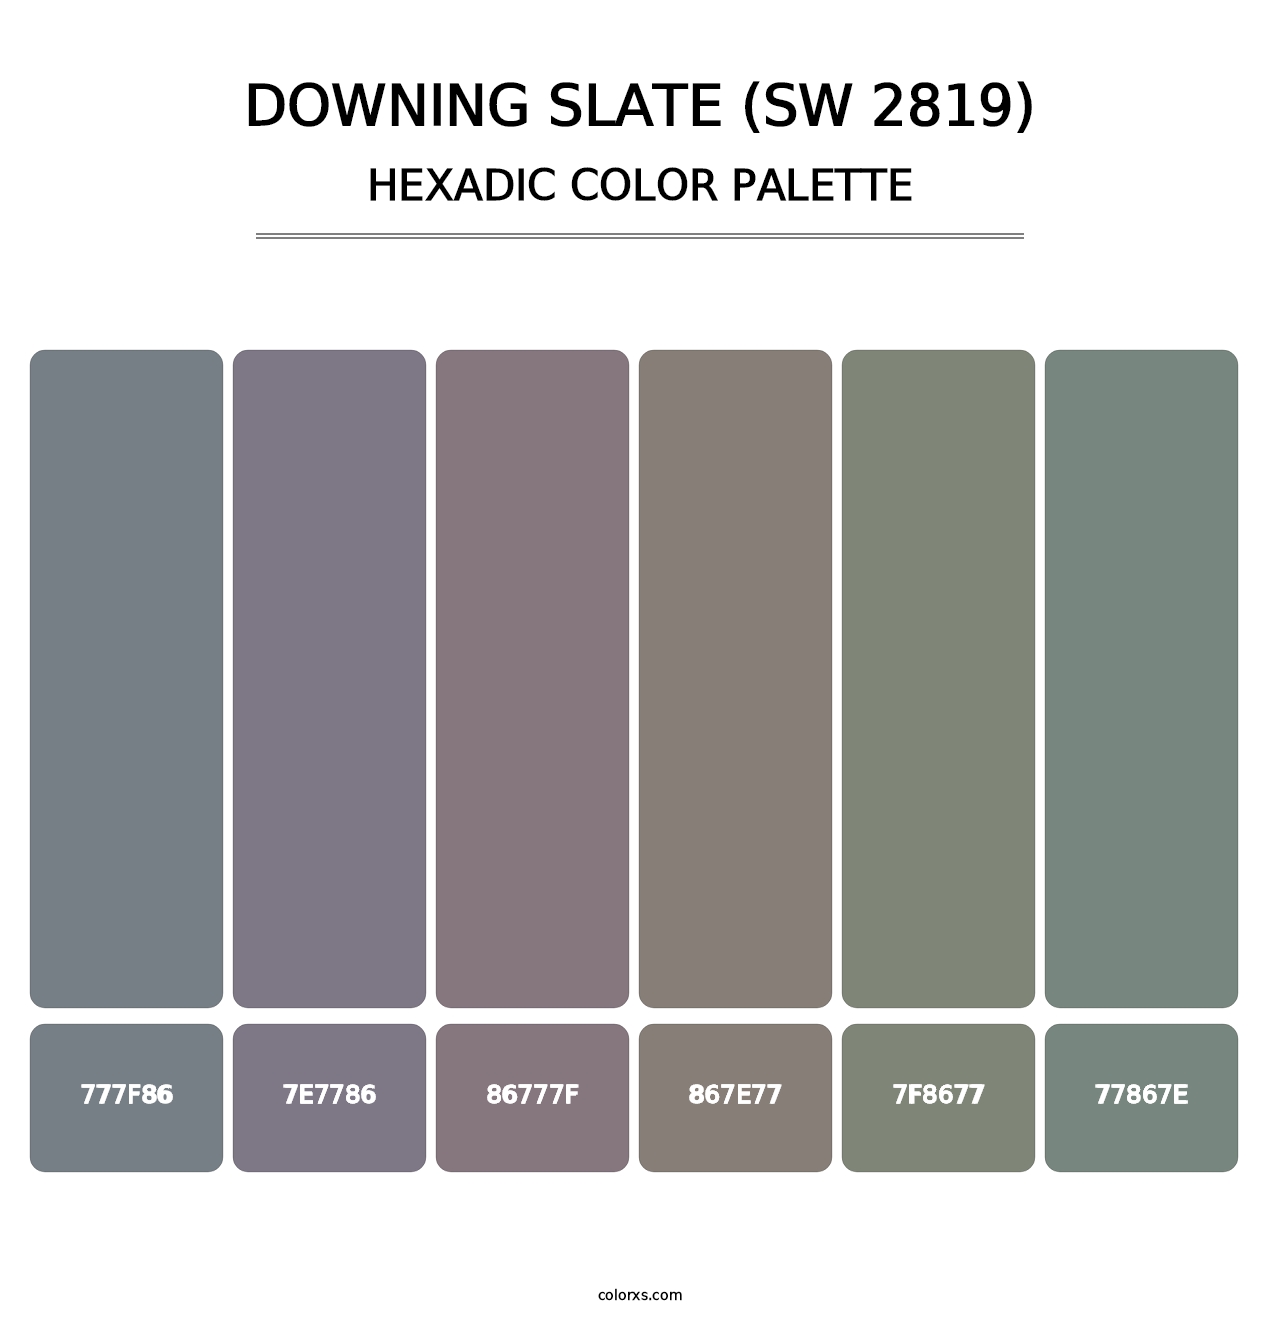 Downing Slate (SW 2819) - Hexadic Color Palette